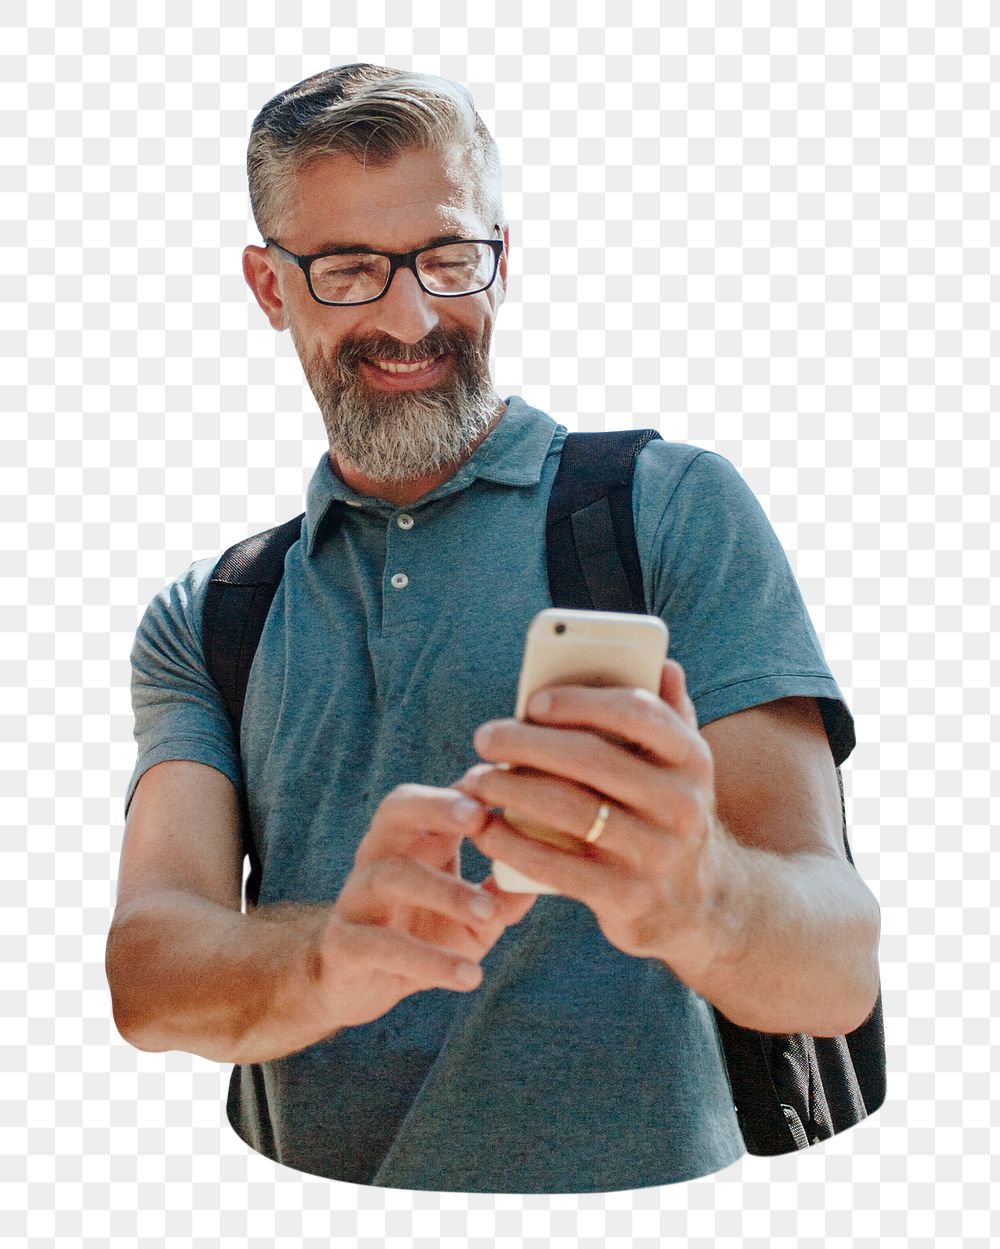 Smiling bearded man png, transparent background